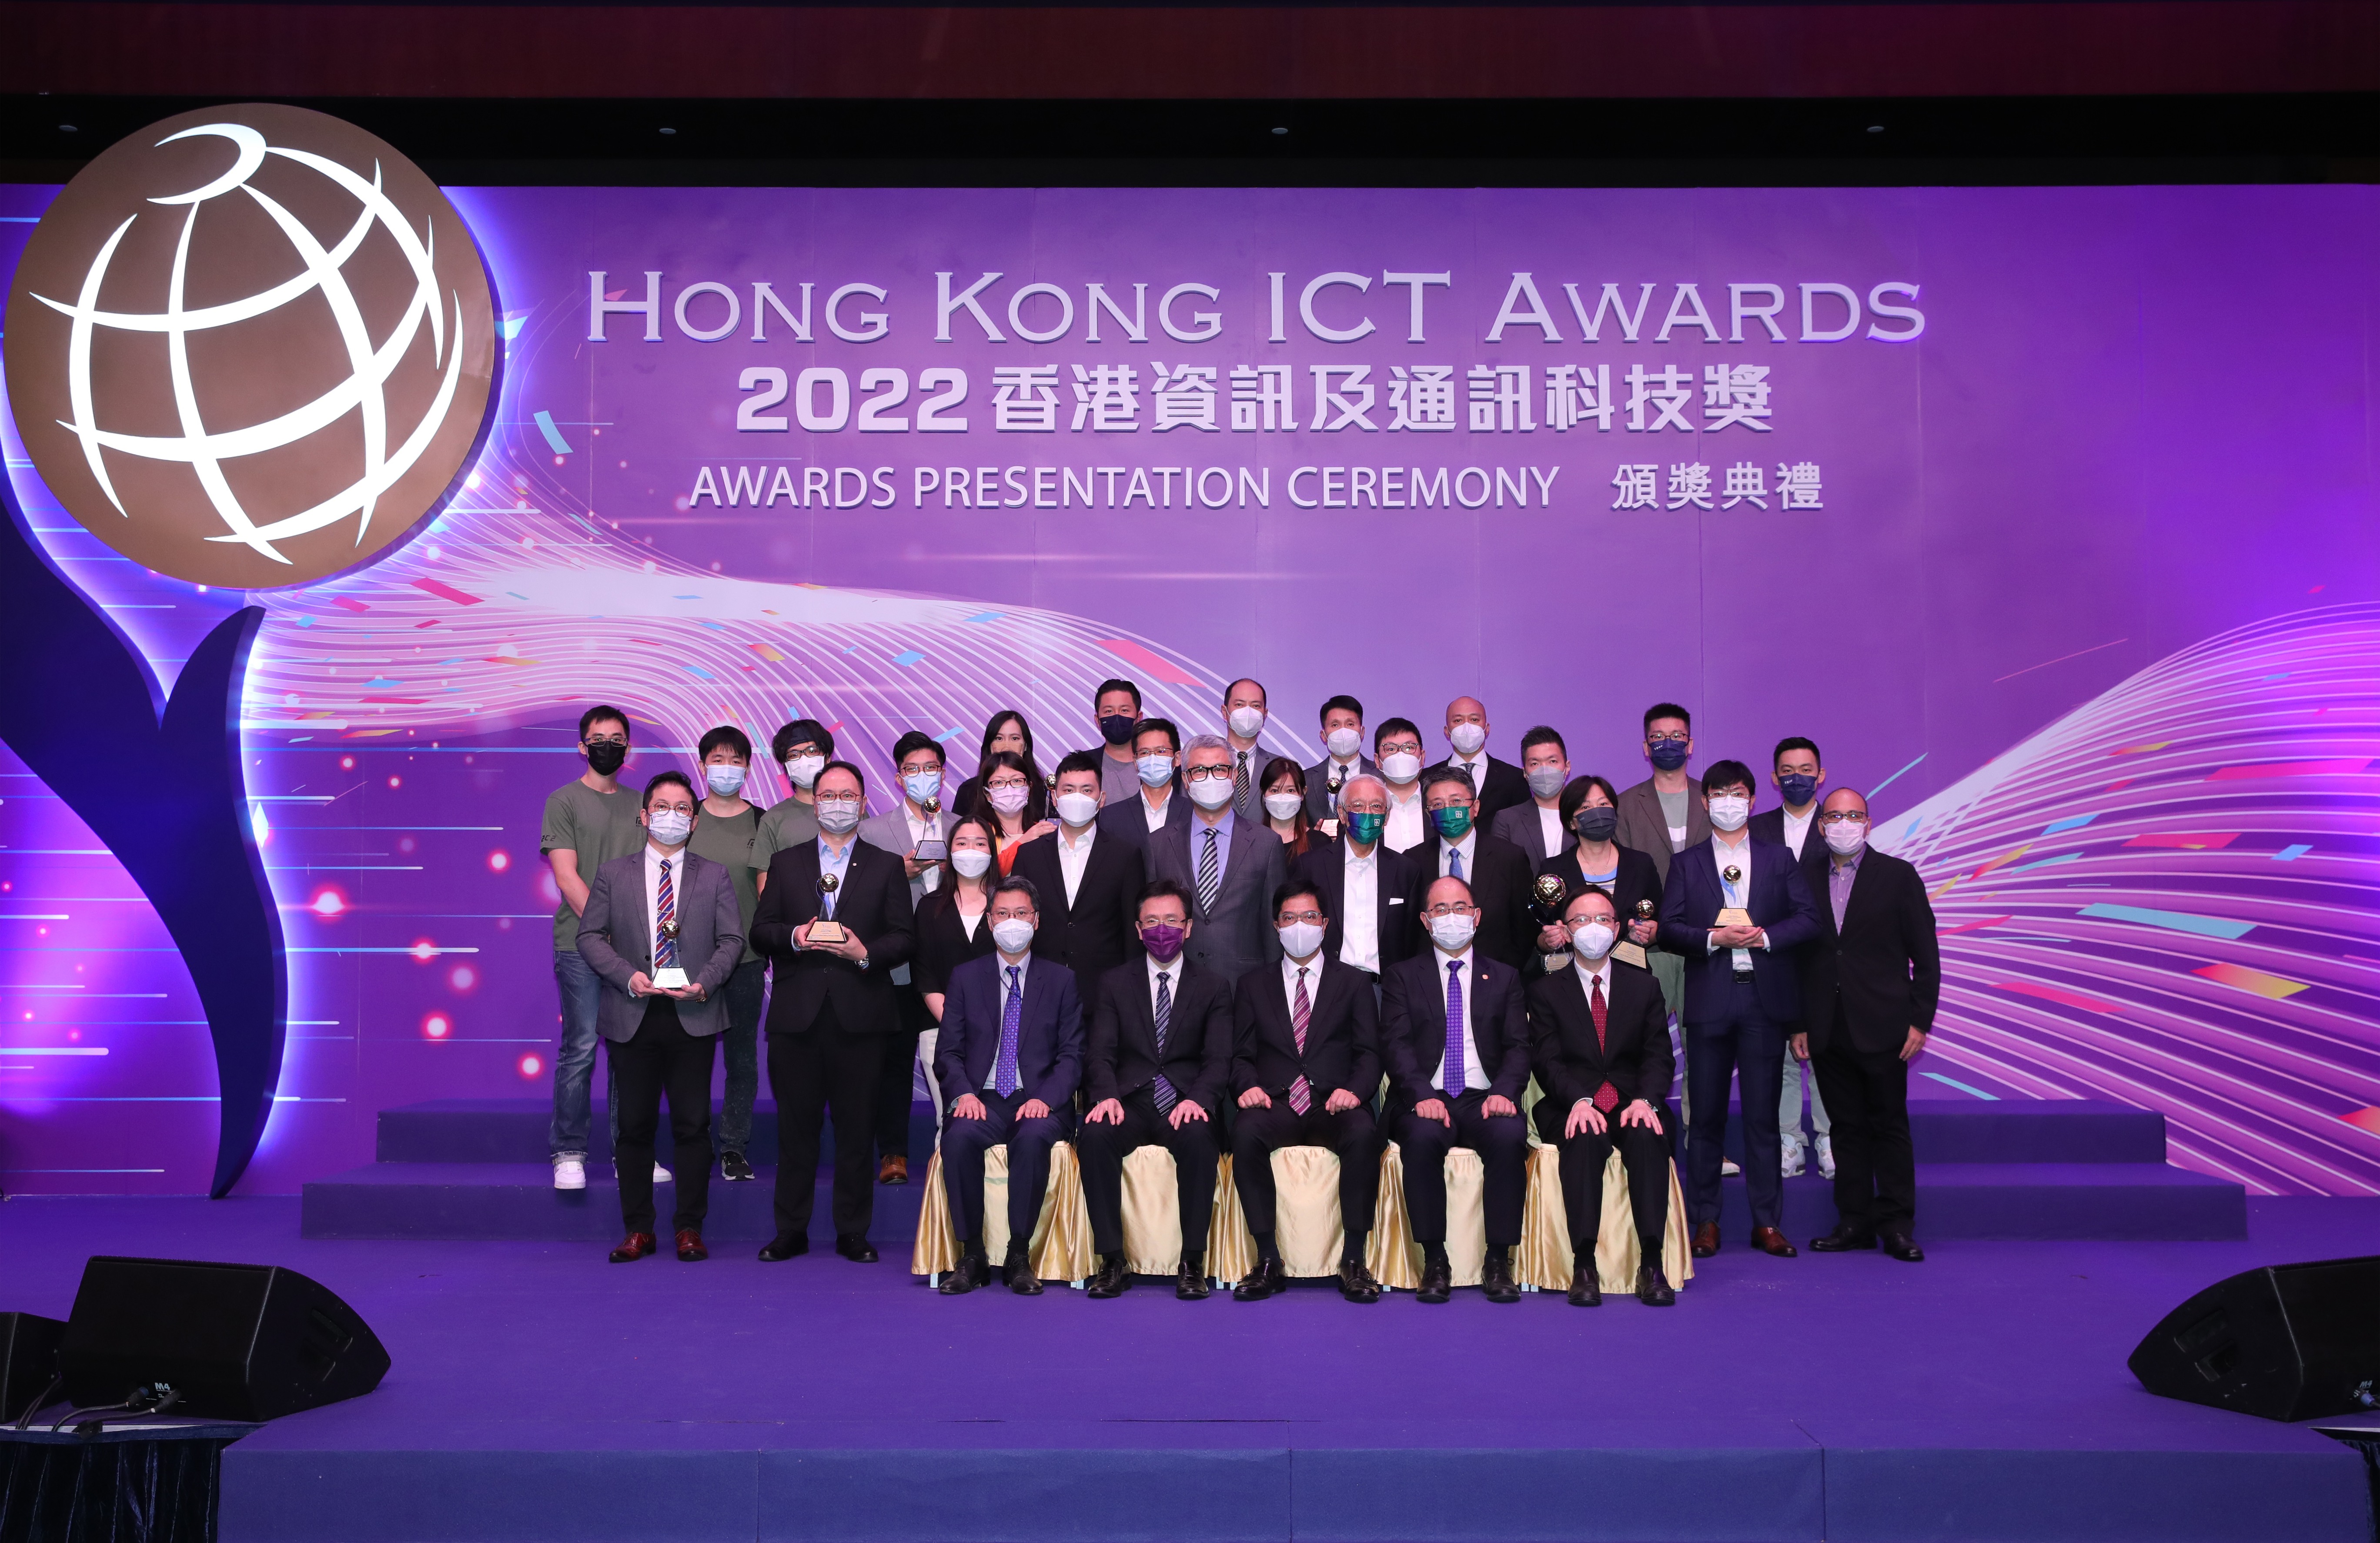 Hong Kong ICT Awards 2022 Smart Business Award Winners Group Photo